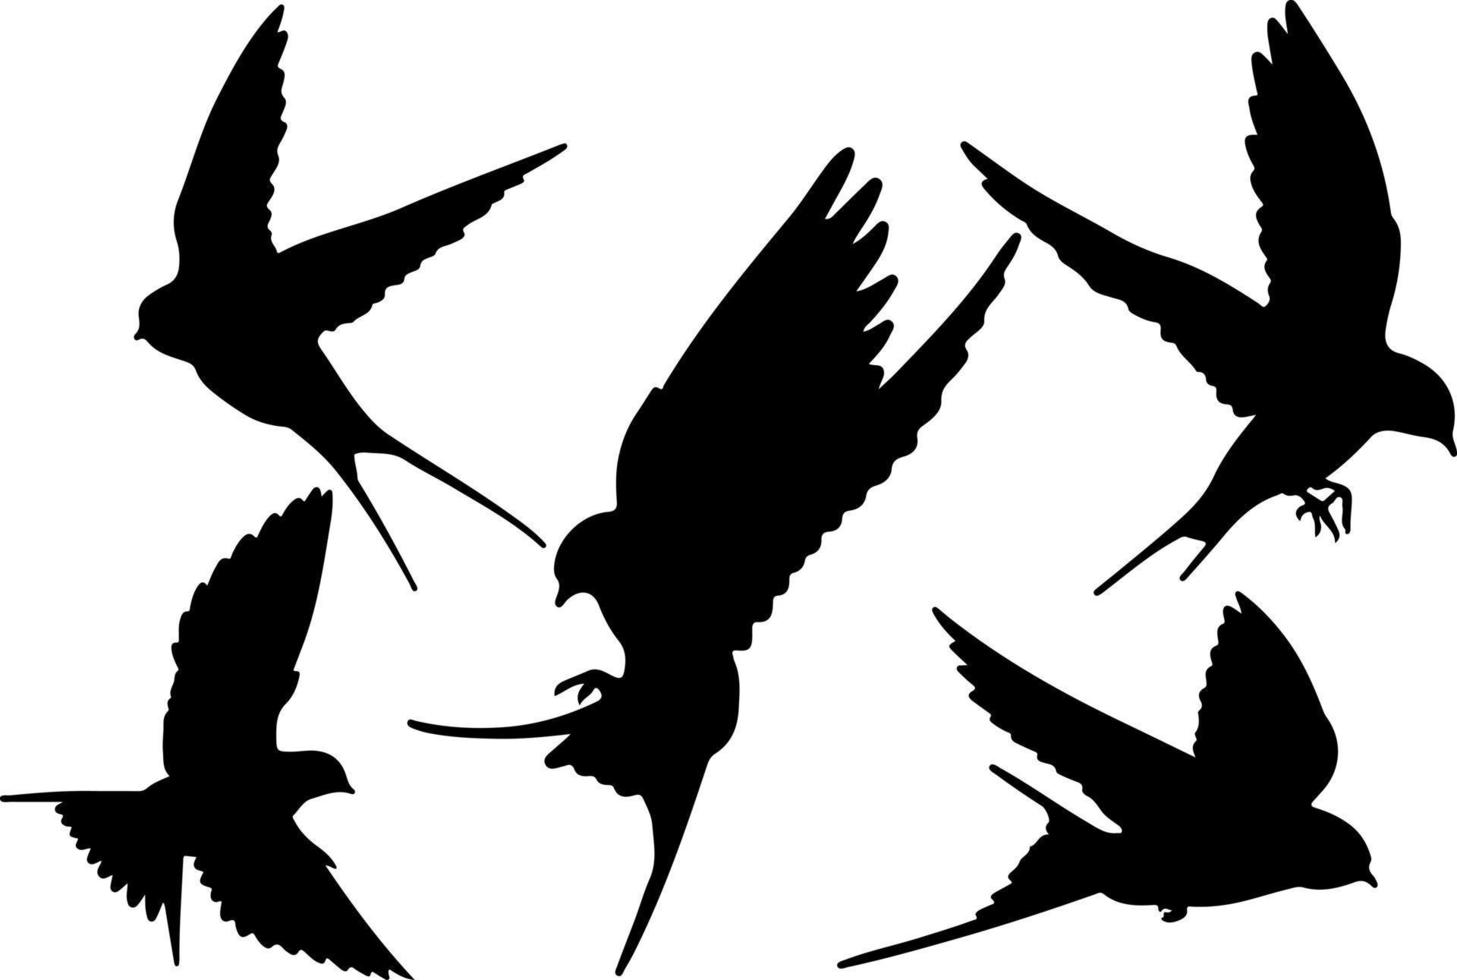 Flying bird silhouette vector for websites, graphics related artwork